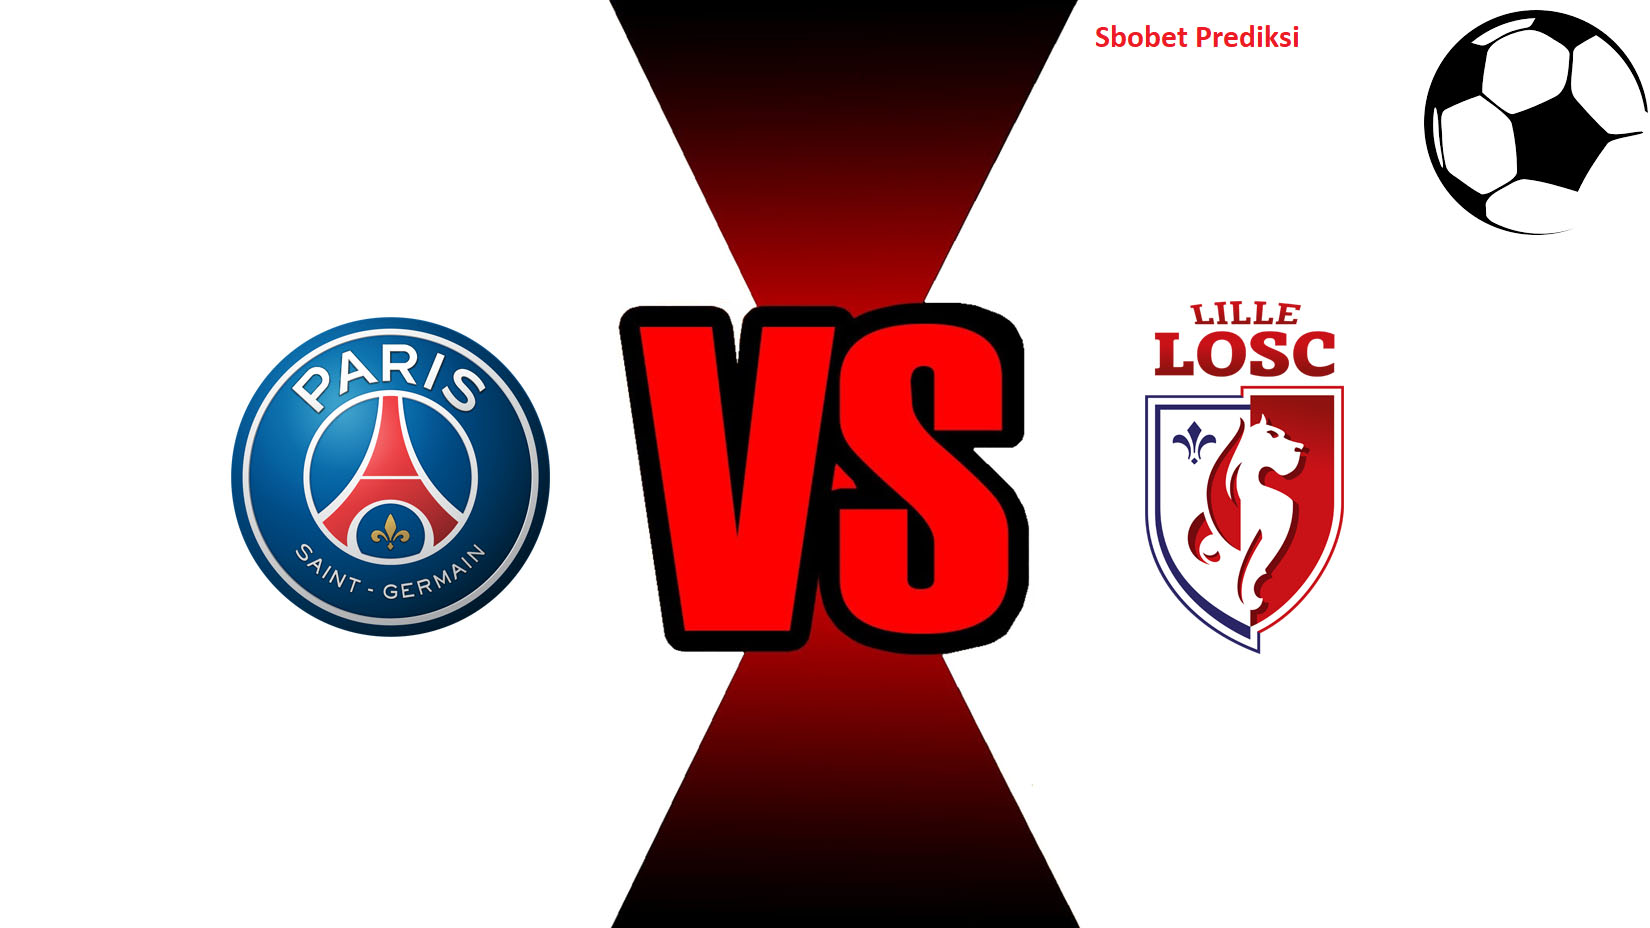 Prediksi Skor Bola Online Paris Saint-Germain vs Lille 3 November 2018